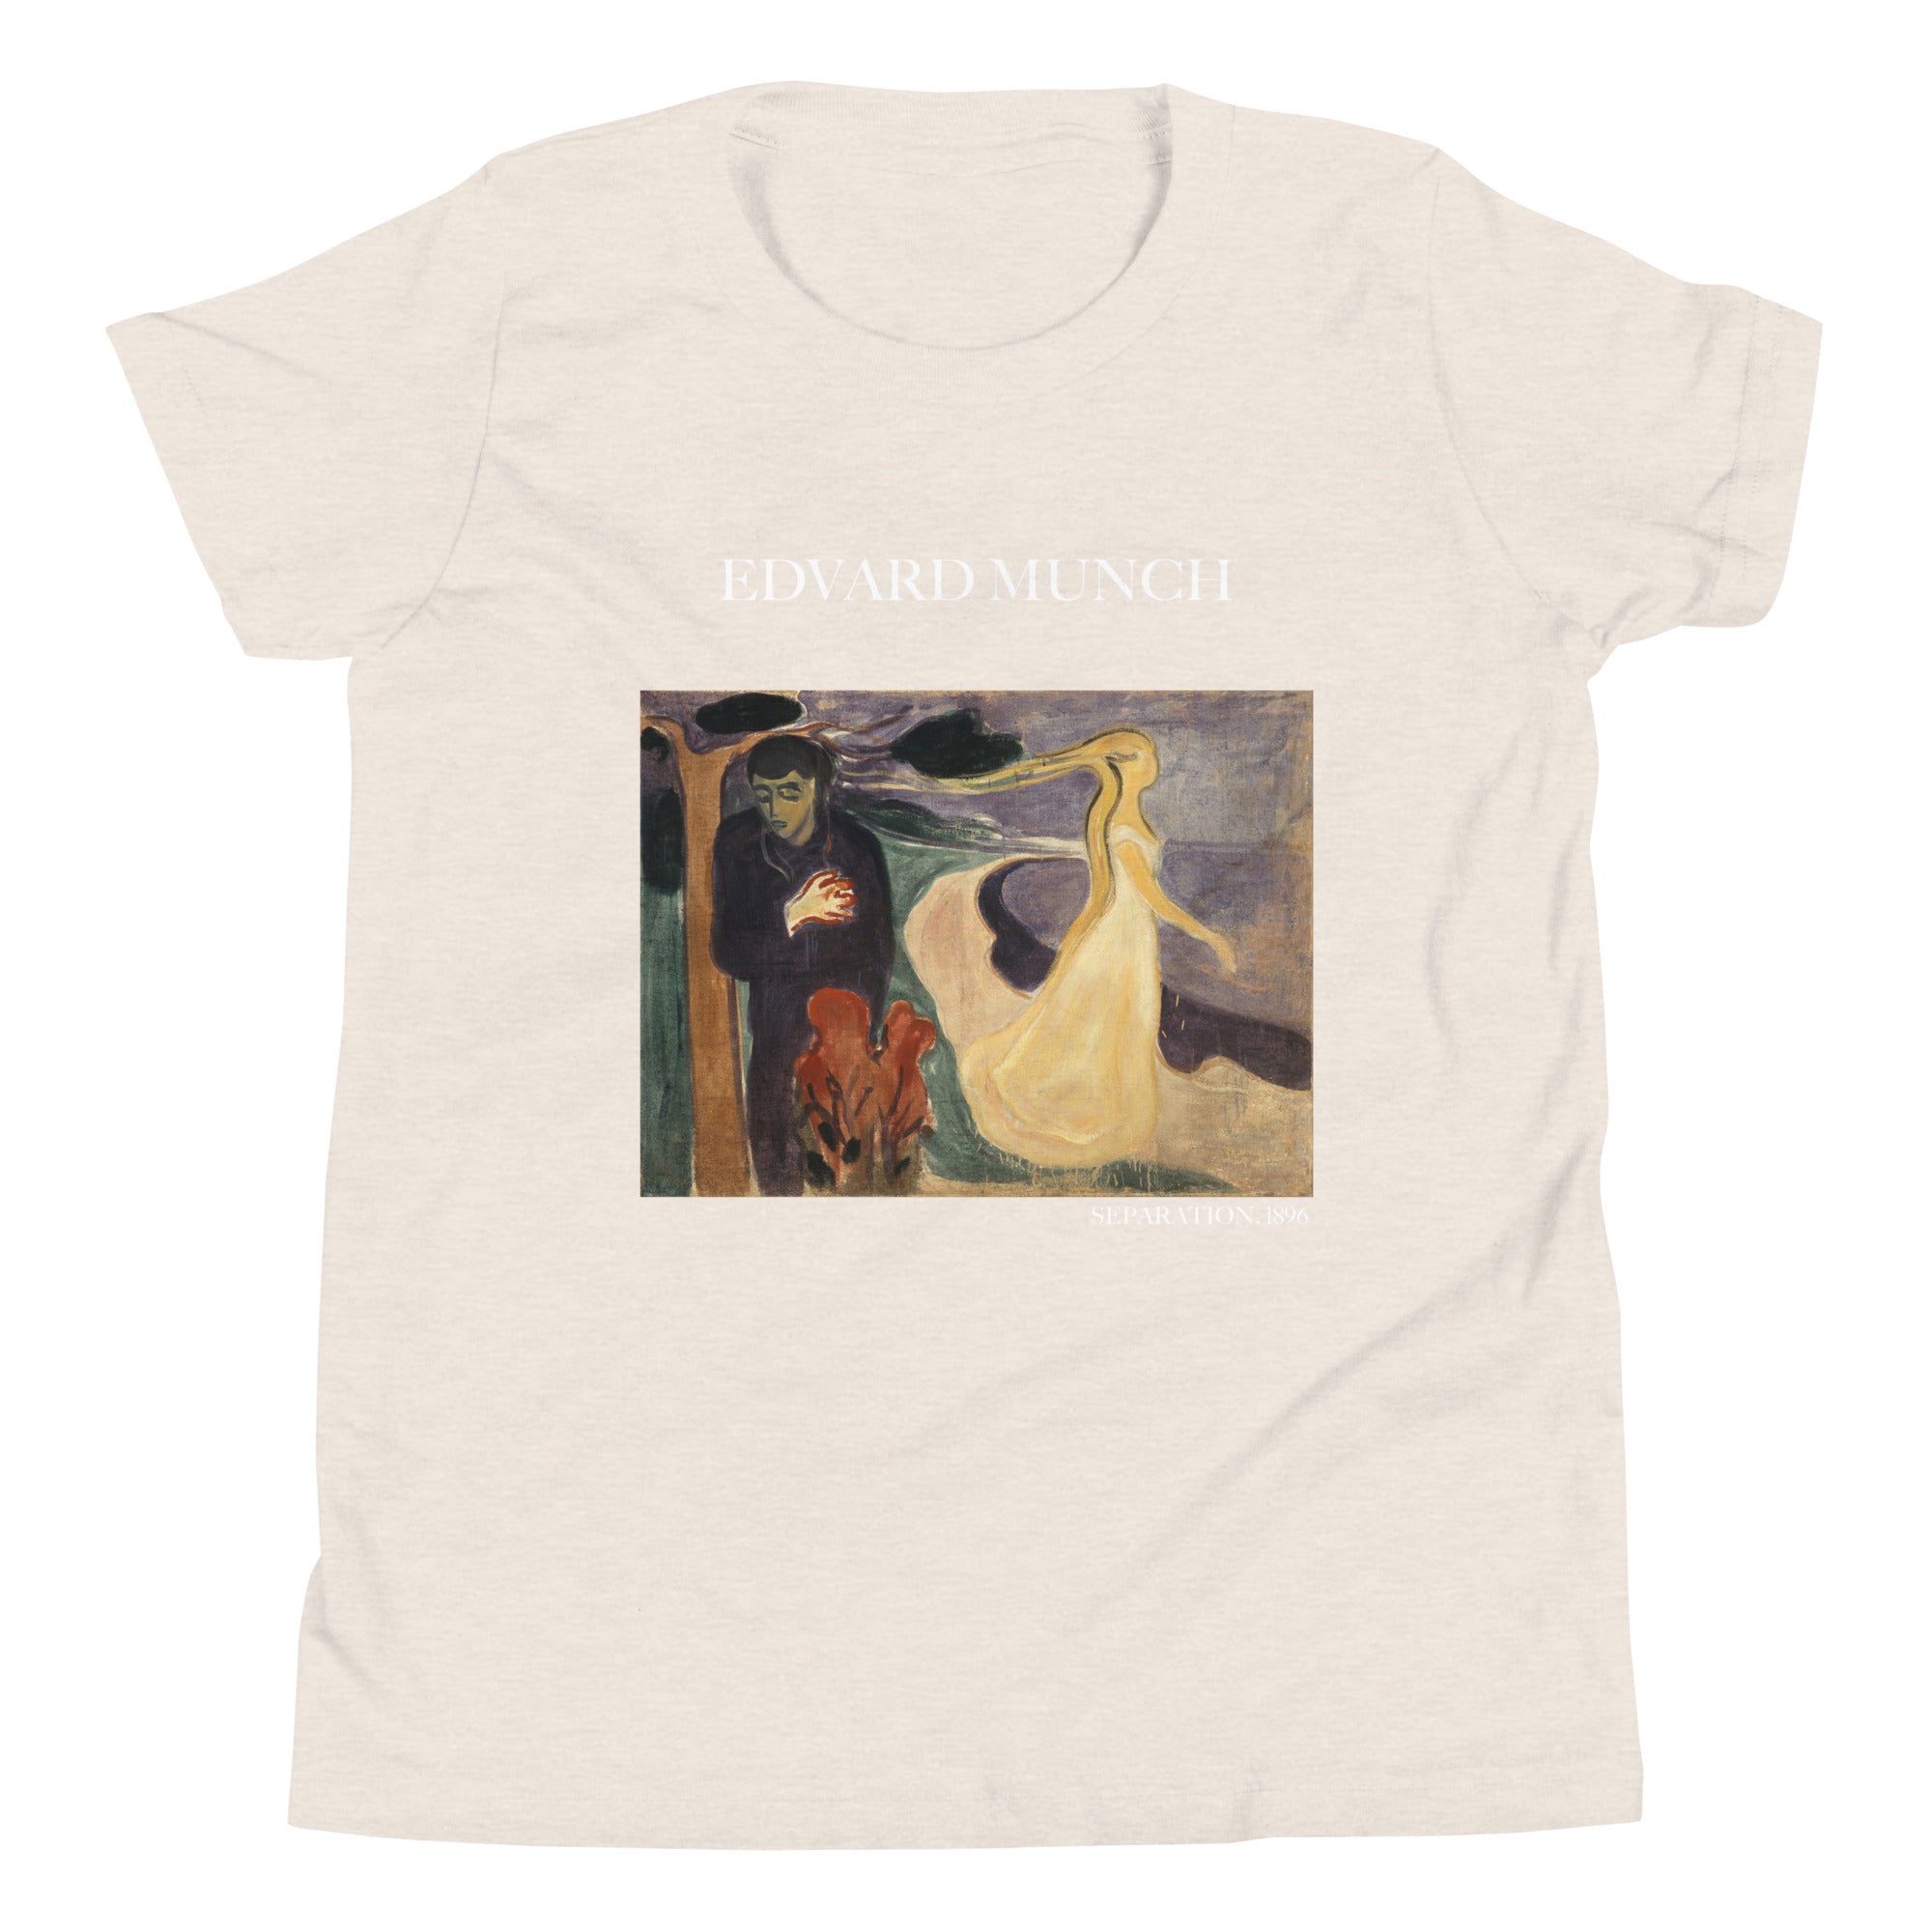 Edvard Munch 'Separation' Famous Painting Short Sleeve T-Shirt | Premium Youth Art Tee